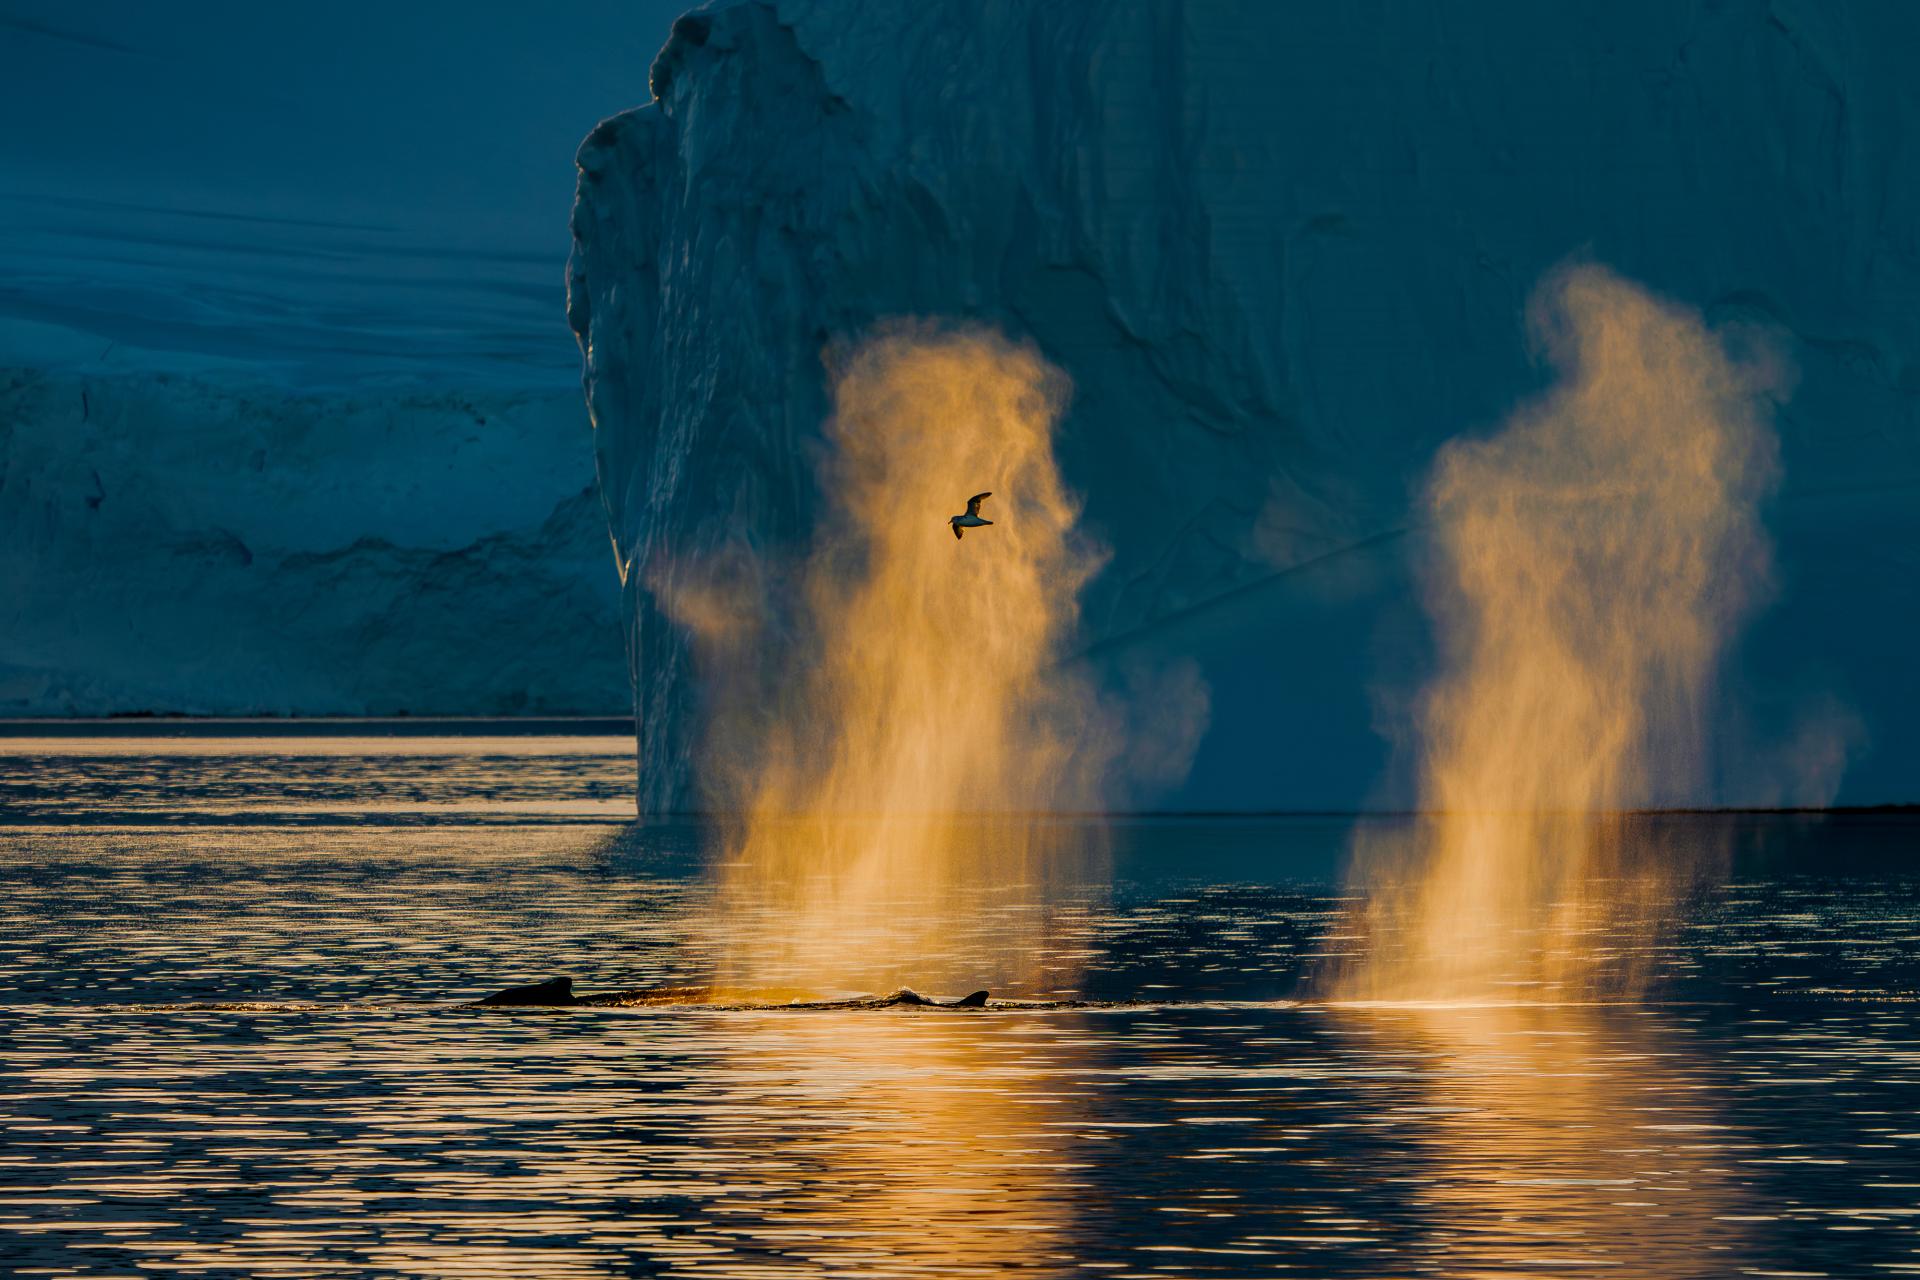 New York Photography Awards Winner - Antarctic Dusk